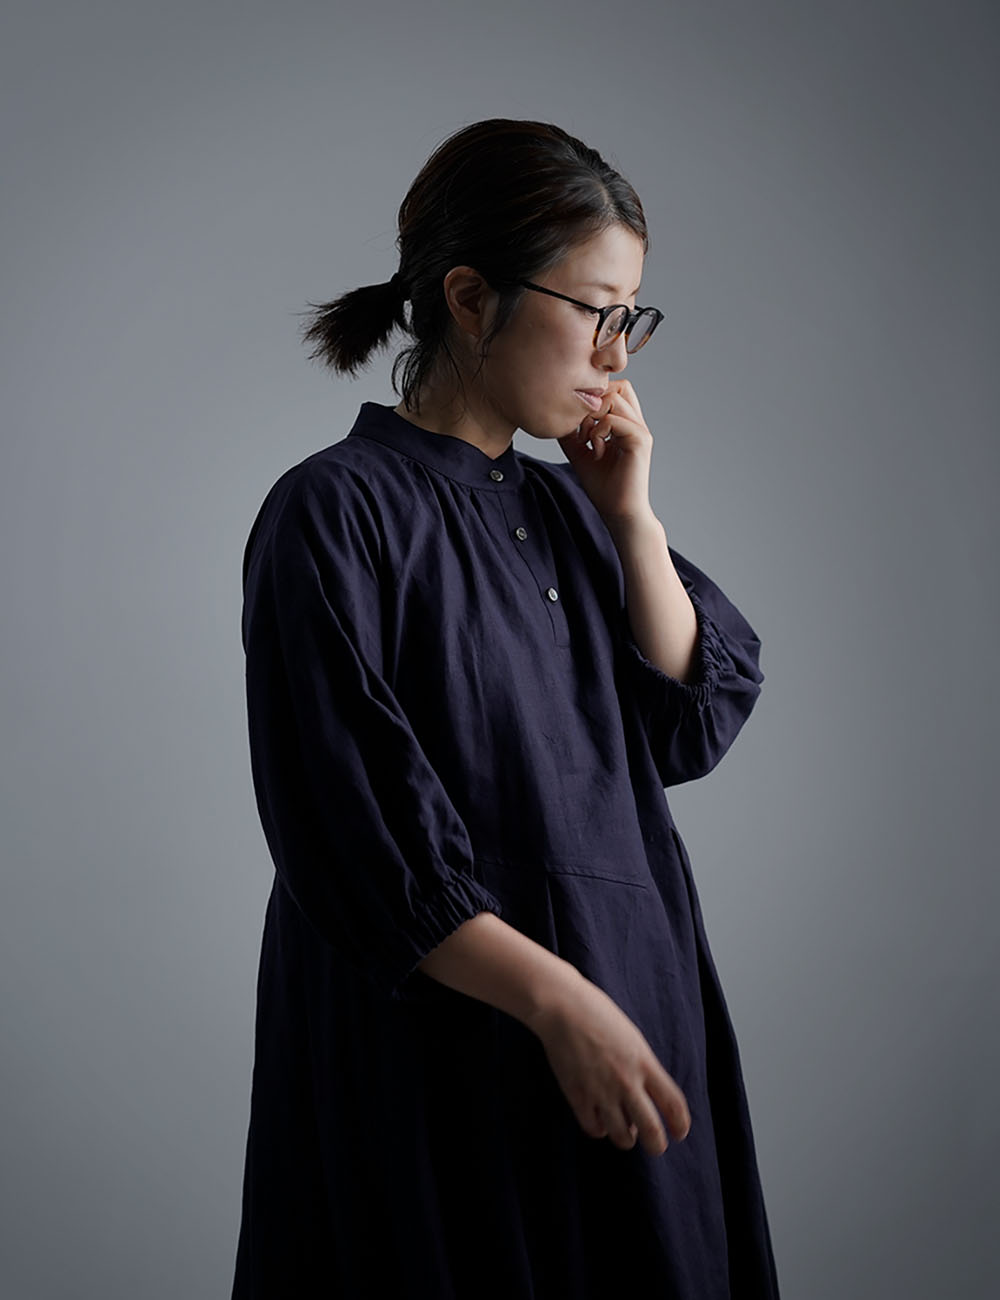 【wafu】Linen Dress　スタンドカラーワンピース　超高密度リネン /黒紅色 a073i-kbi1